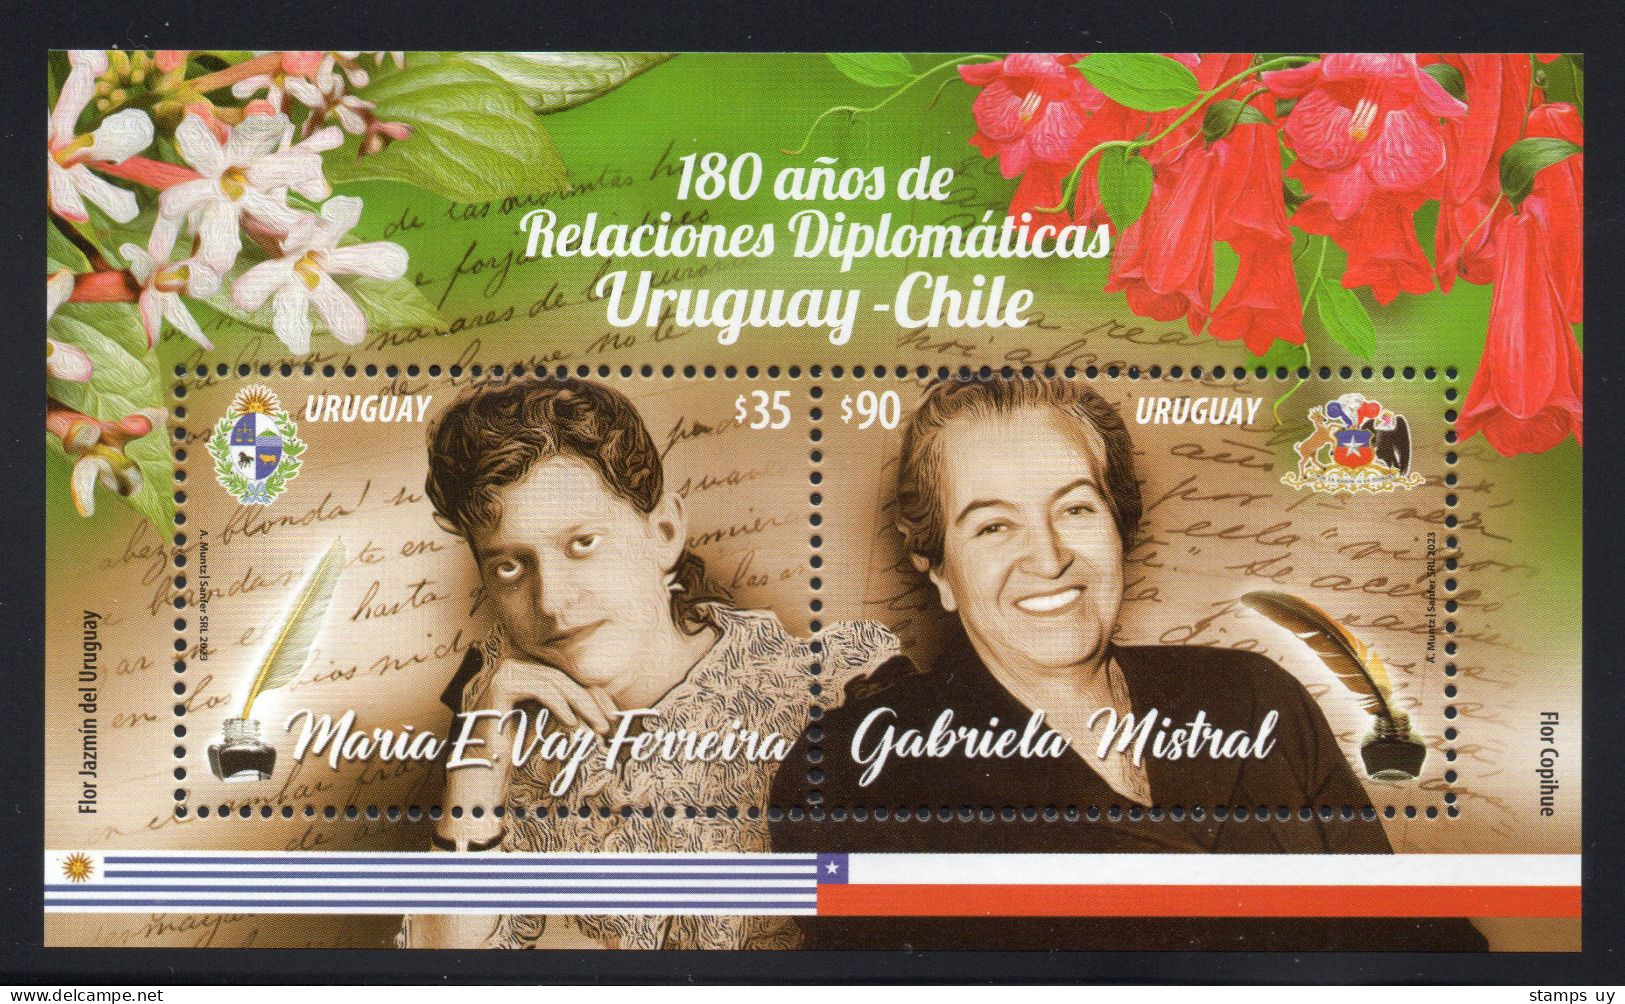 URUGUAY 2023 (Diplomacy, Chile, Poets, M E Vaz Ferreira, Gabriela Mistral, Nobel Prize, Literature, Flowers) - 1 Block - Stamps